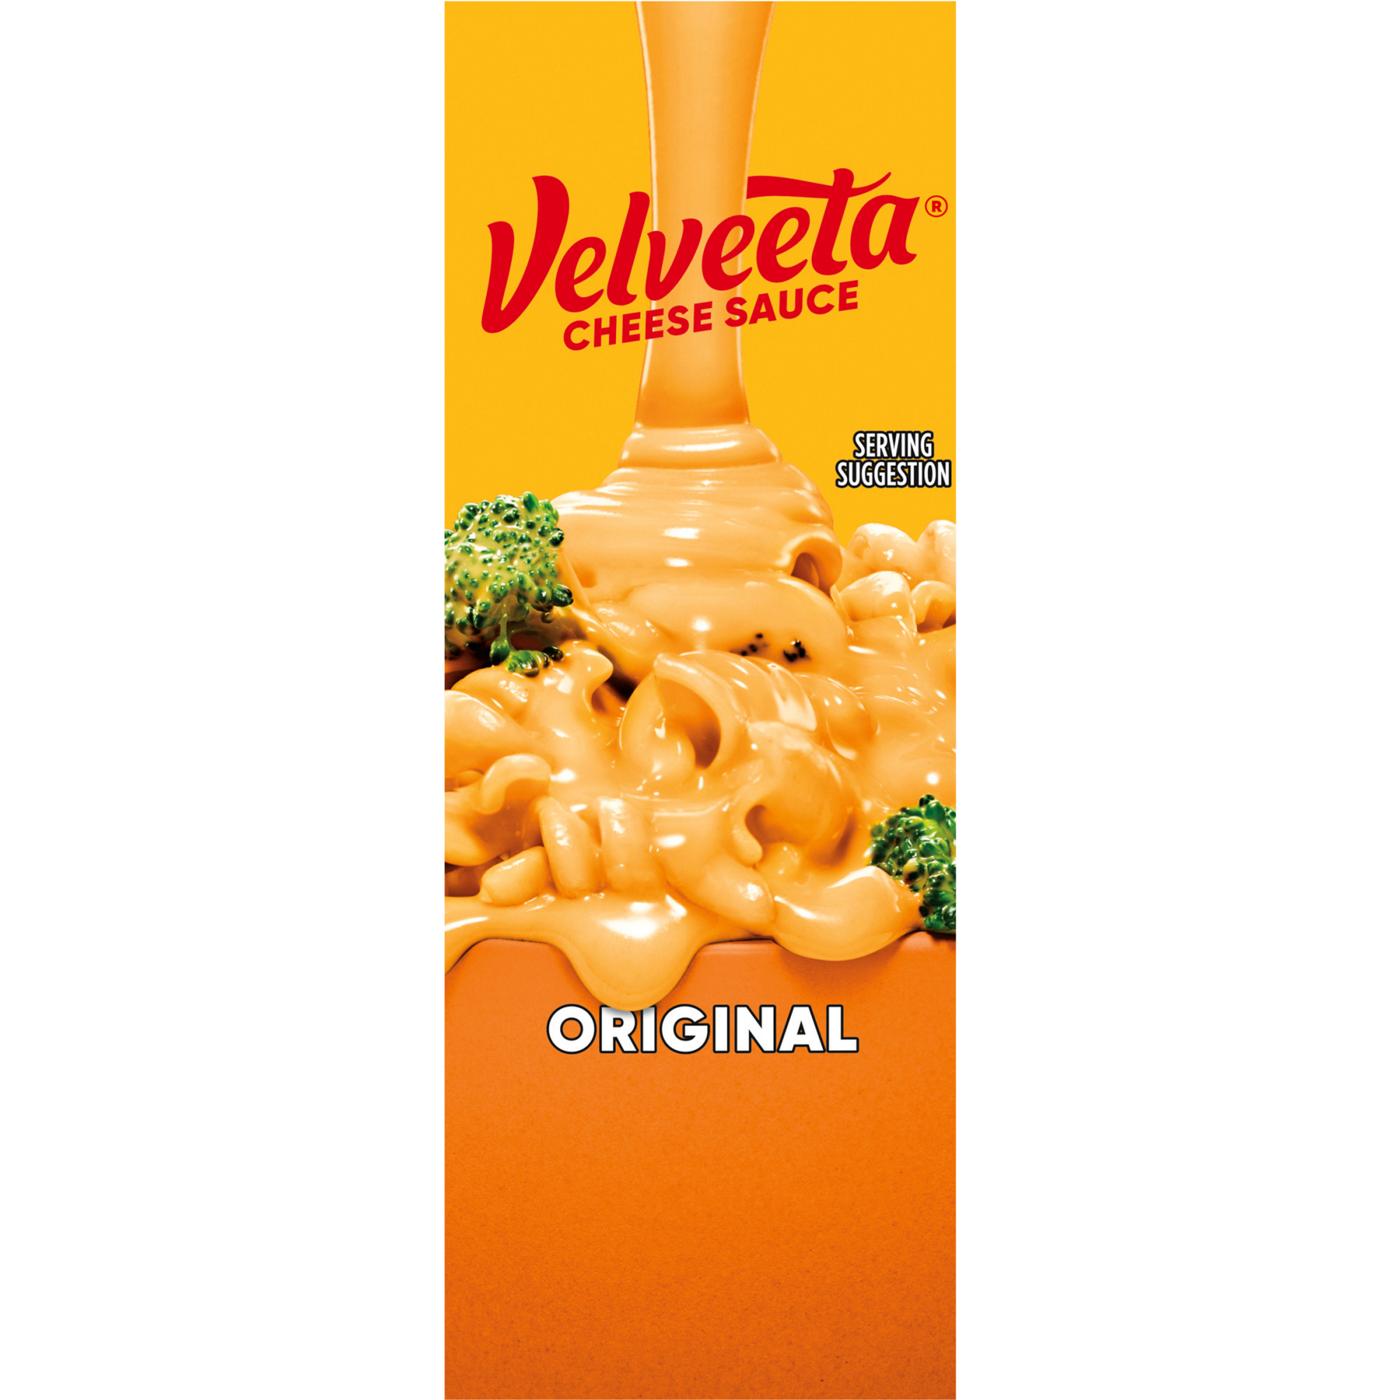 Velveeta Original Cheese Sauce Pouches; image 6 of 9